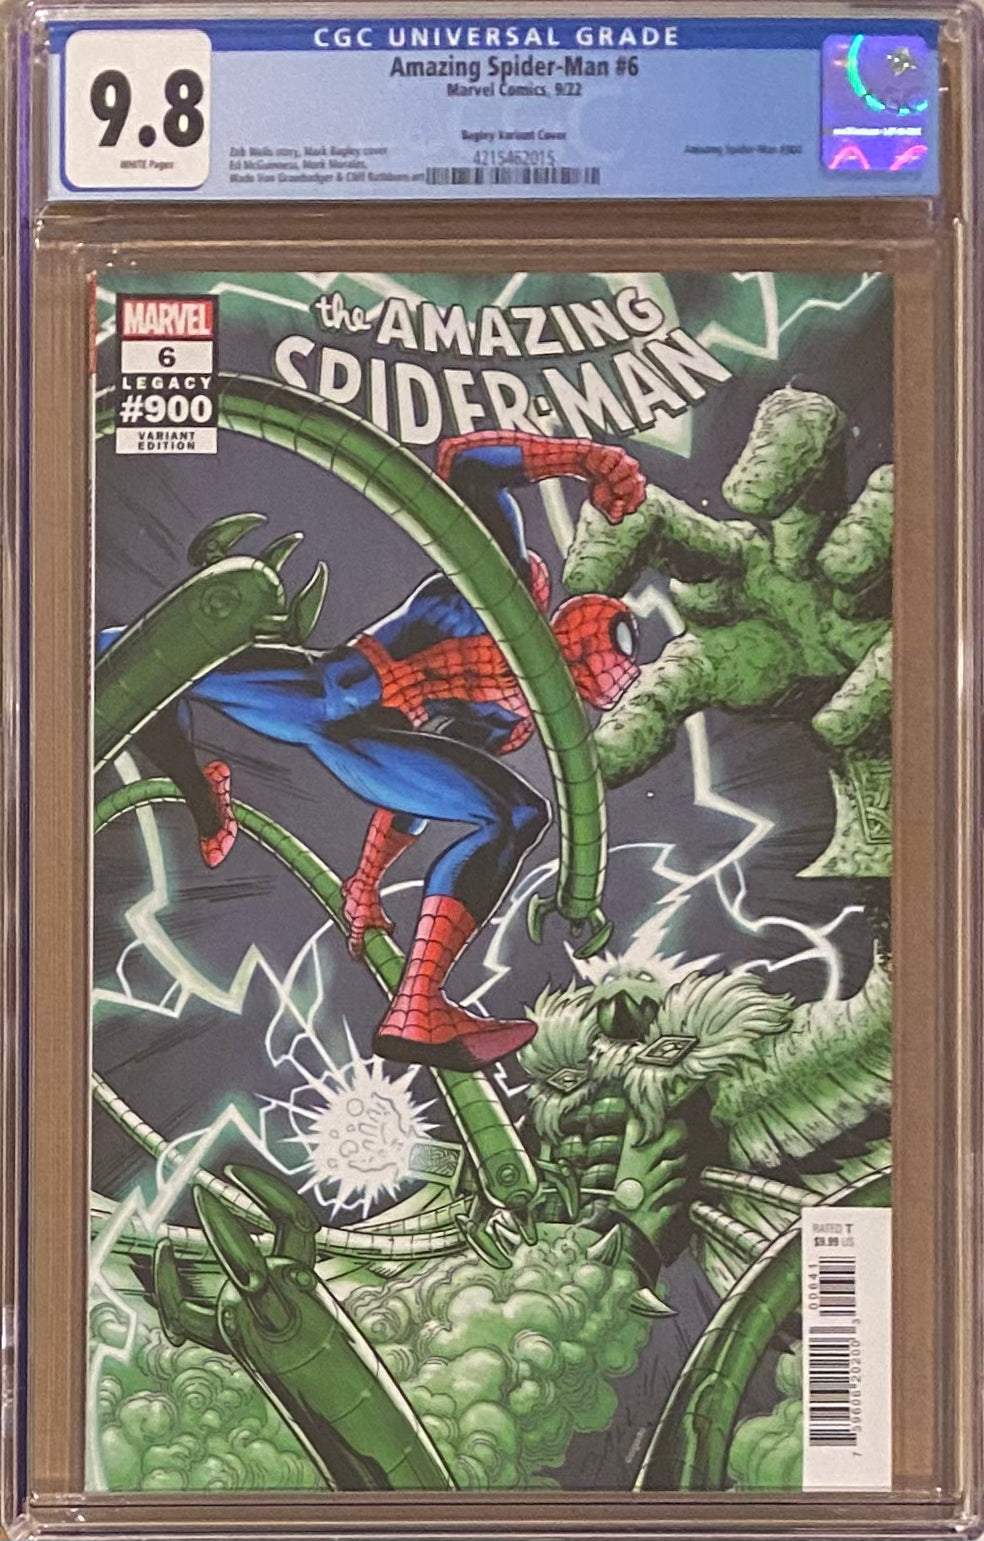 Amazing Spider-Man #6 (#900) Bagley Variant CGC 9.8